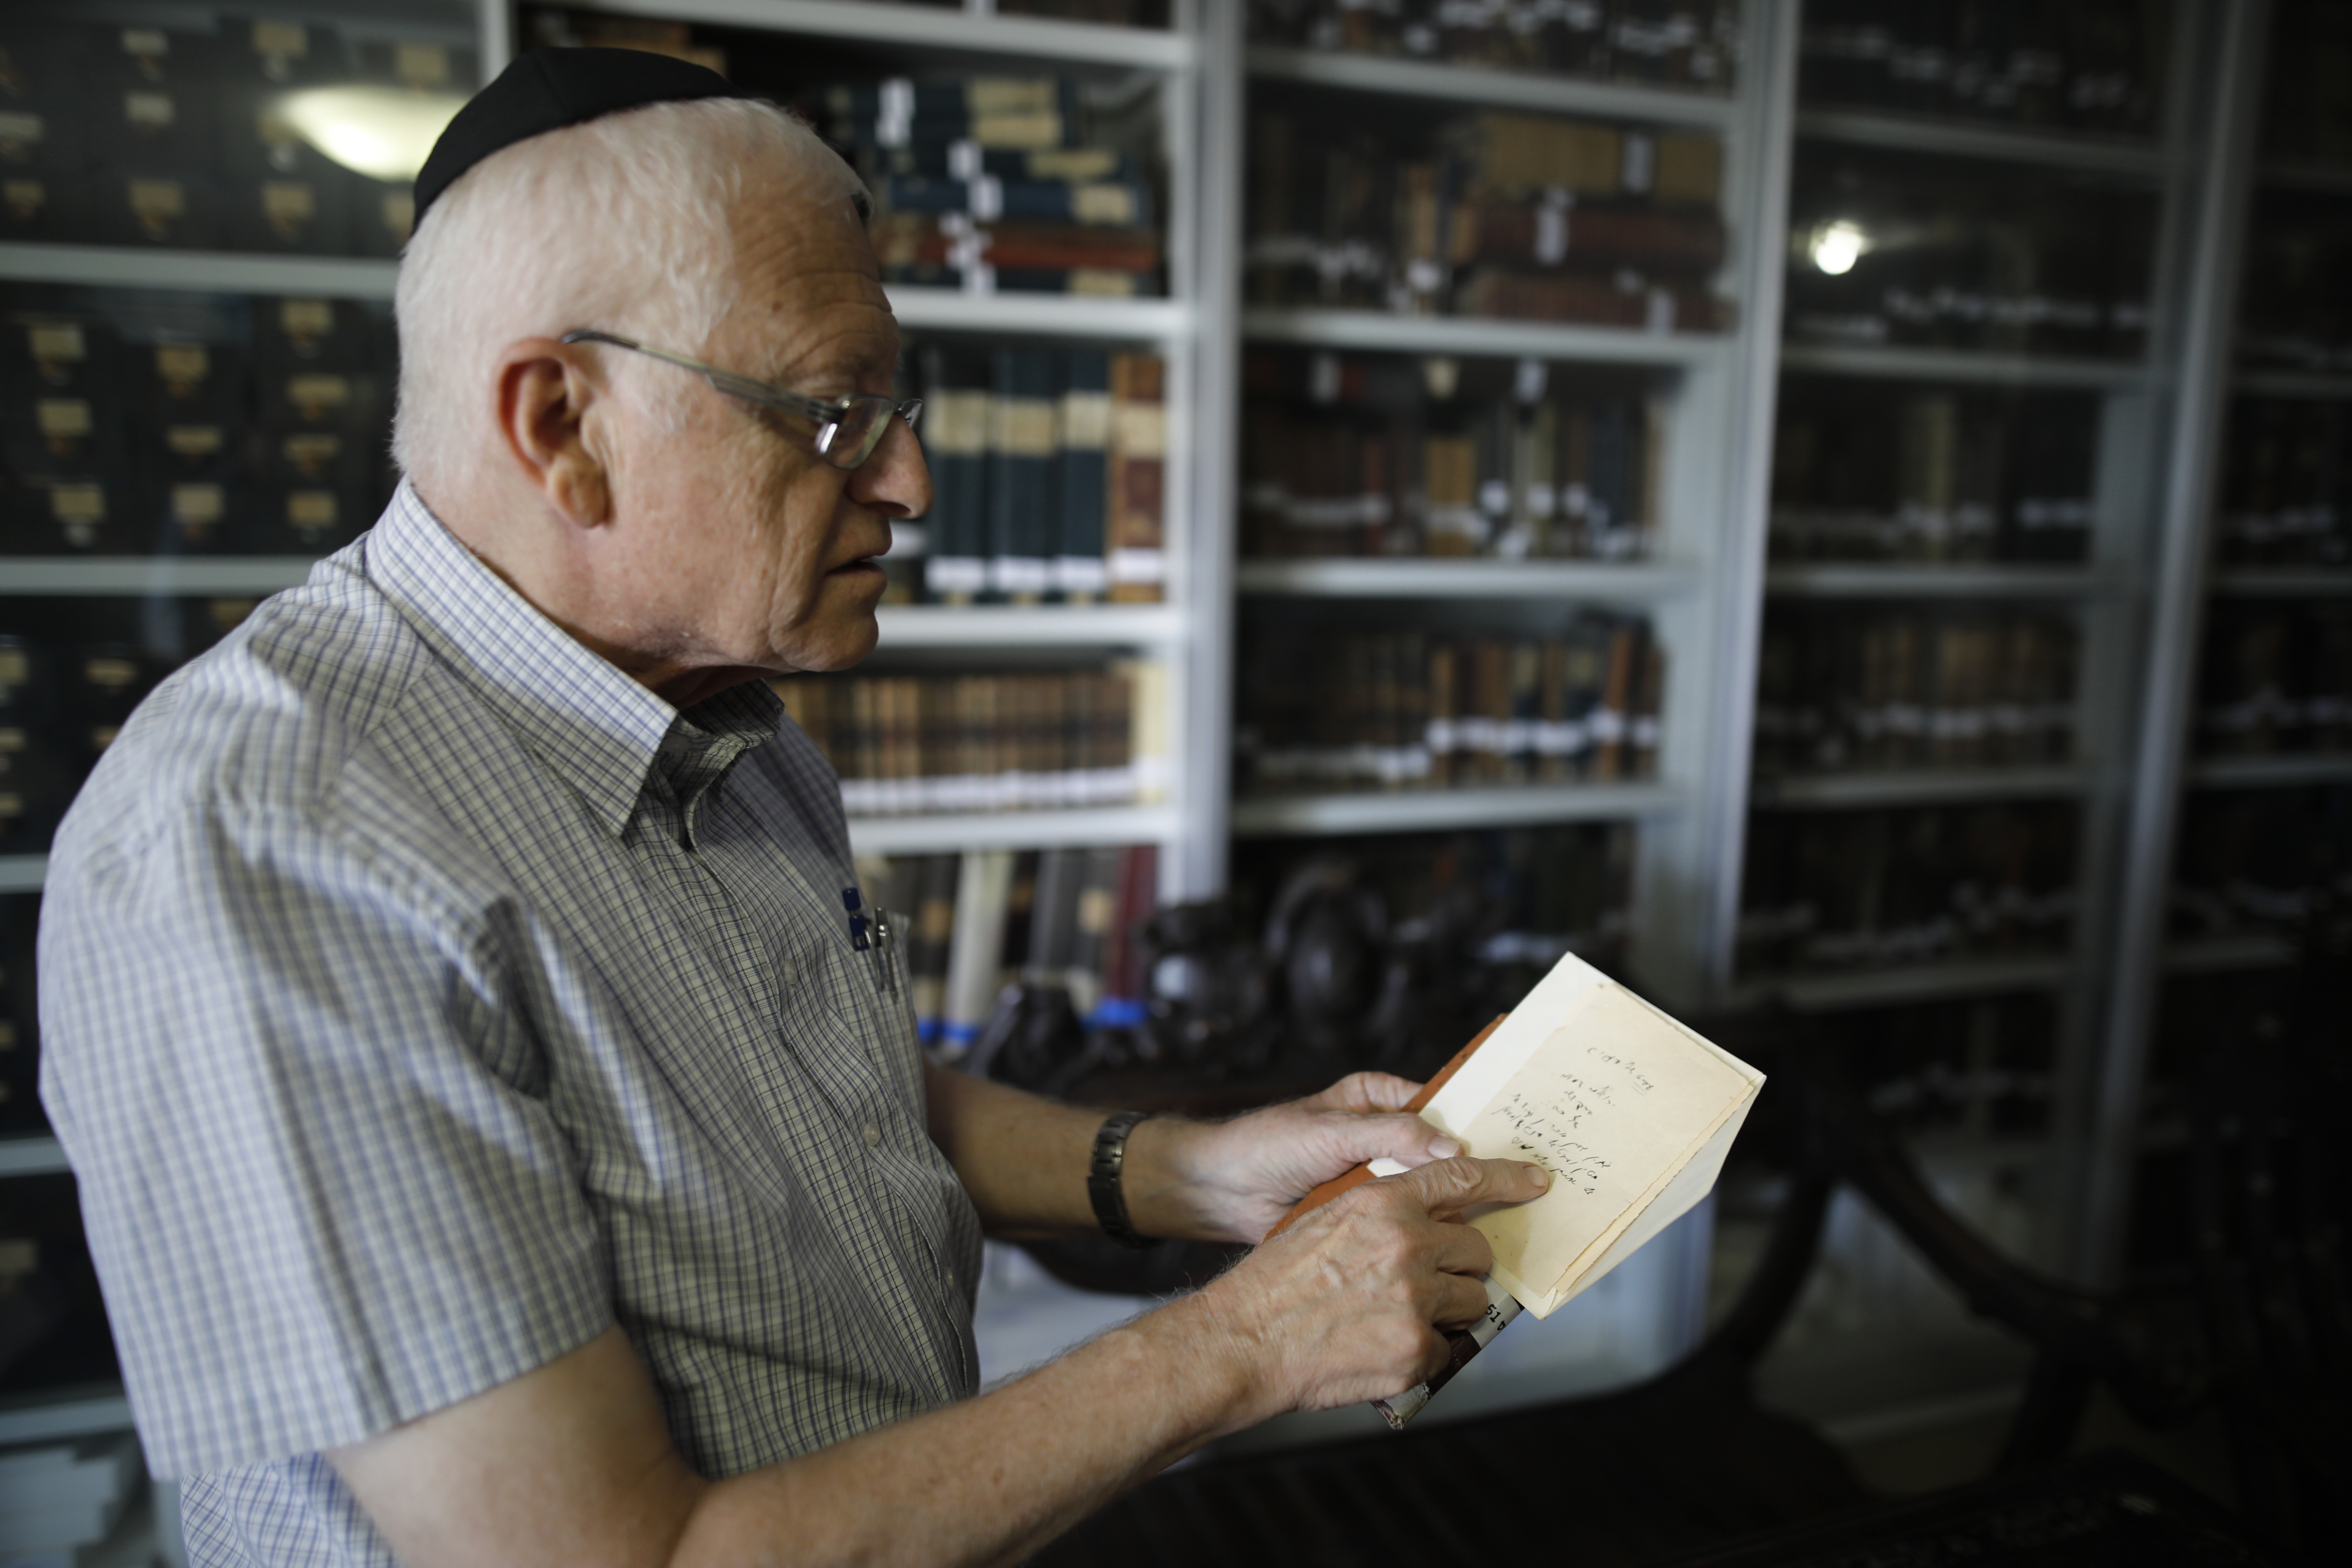 Gabriel Birnbaum shows old notes written by Eliezer Ben Yehuda, considered the father of modern Hebrew, on August 23, 2017. (MENAHEM KAHANA / AFP)